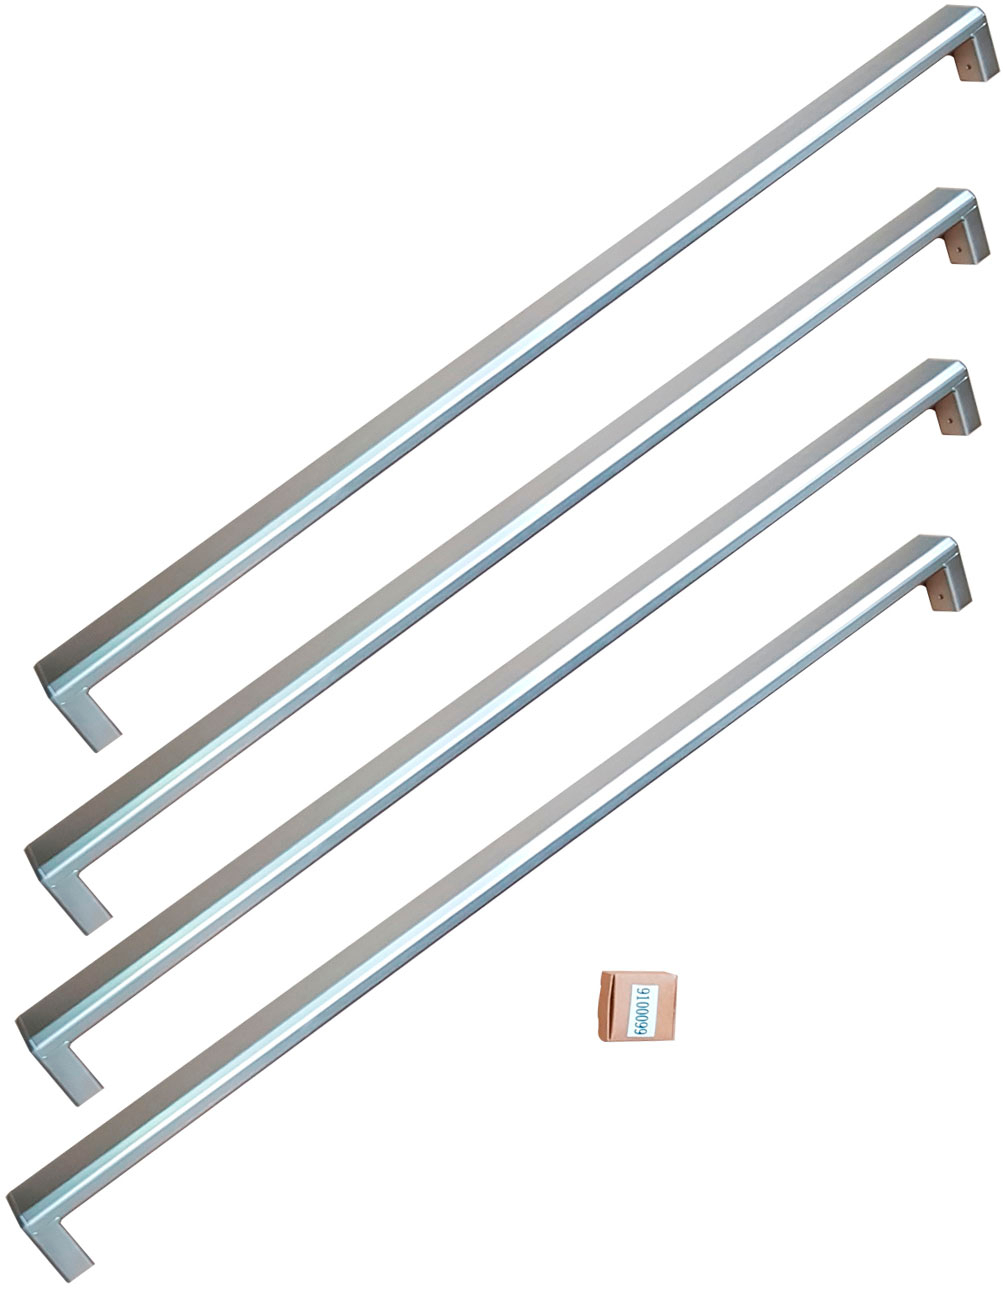 

Professional series door handle kit for select Bertazzoni French Door Refrigerators. - Stainless steel